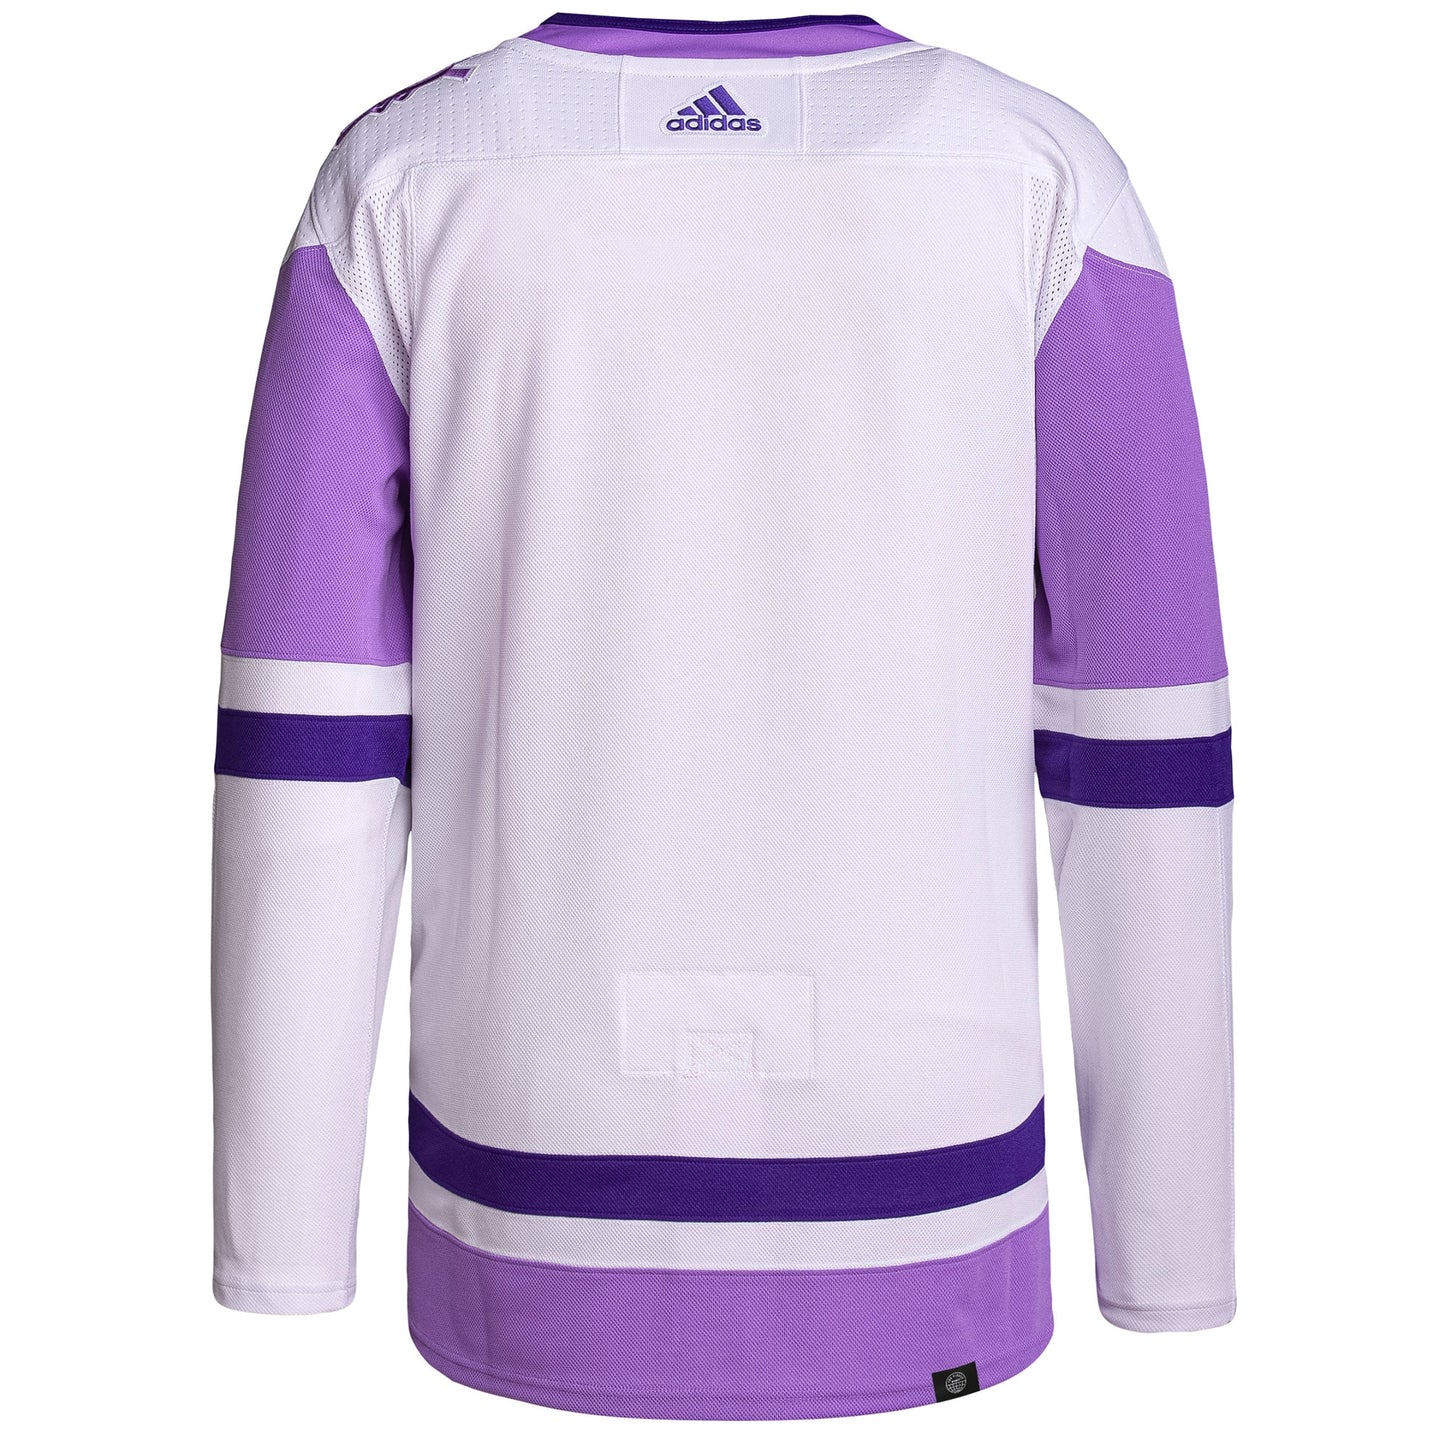 Washington Capitals adidas Hockey Fights Cancer Primegreen Authentic Blank Practice Jersey - White/Purple